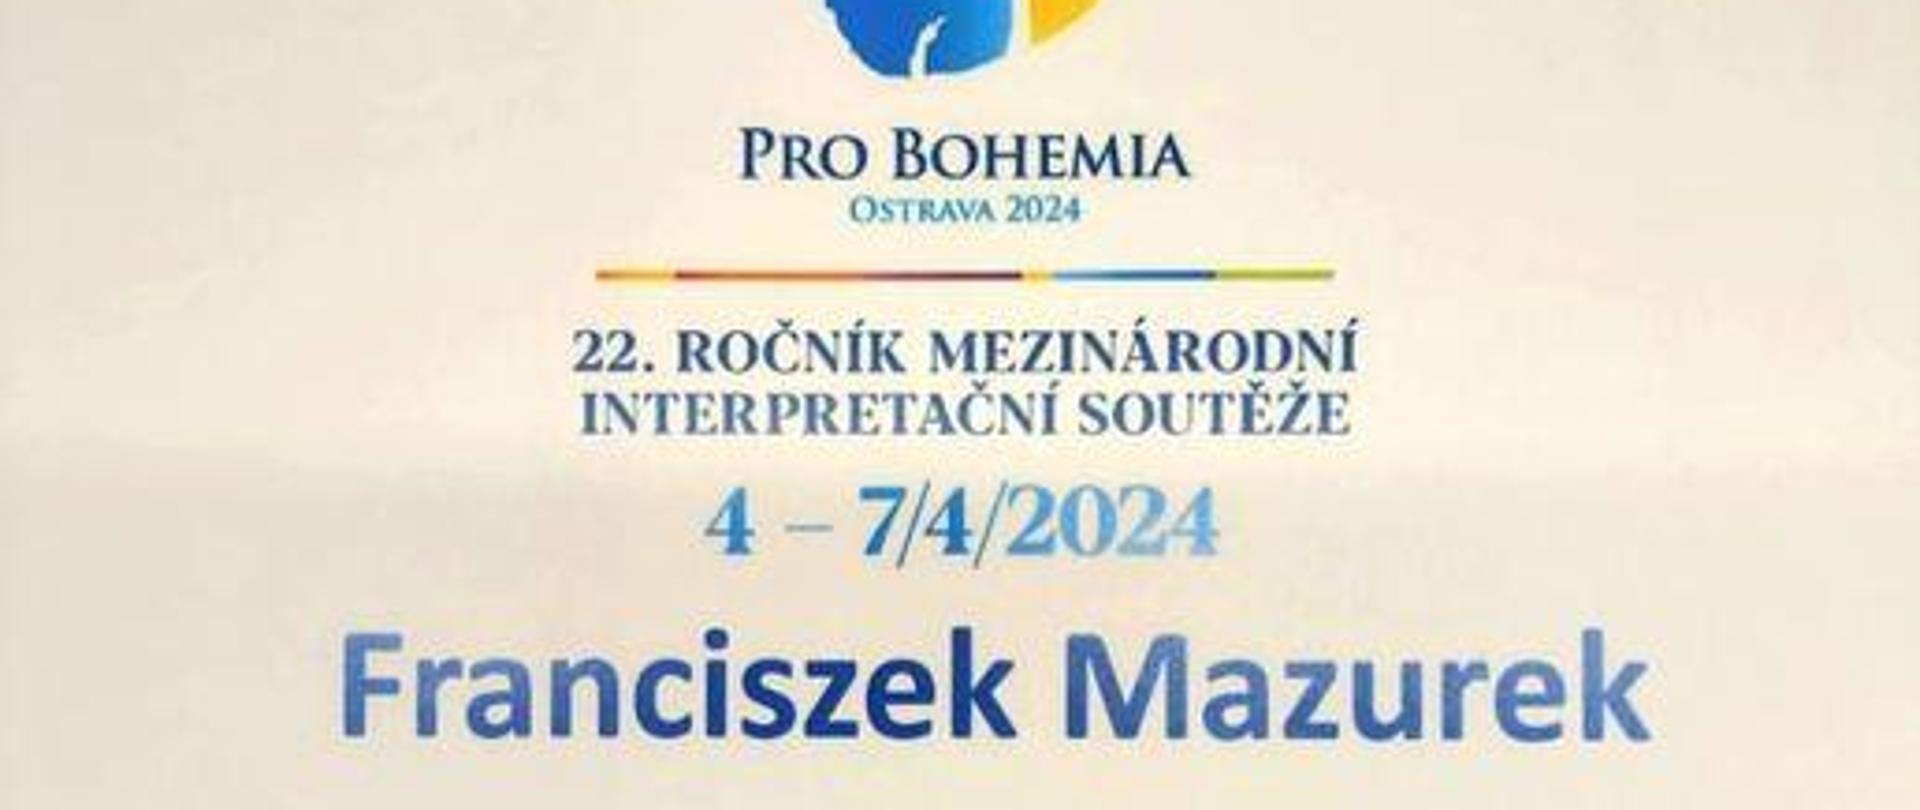 Dyplom laureata I miejsca z napisem Pro Bohemia Franciszek Mazurek